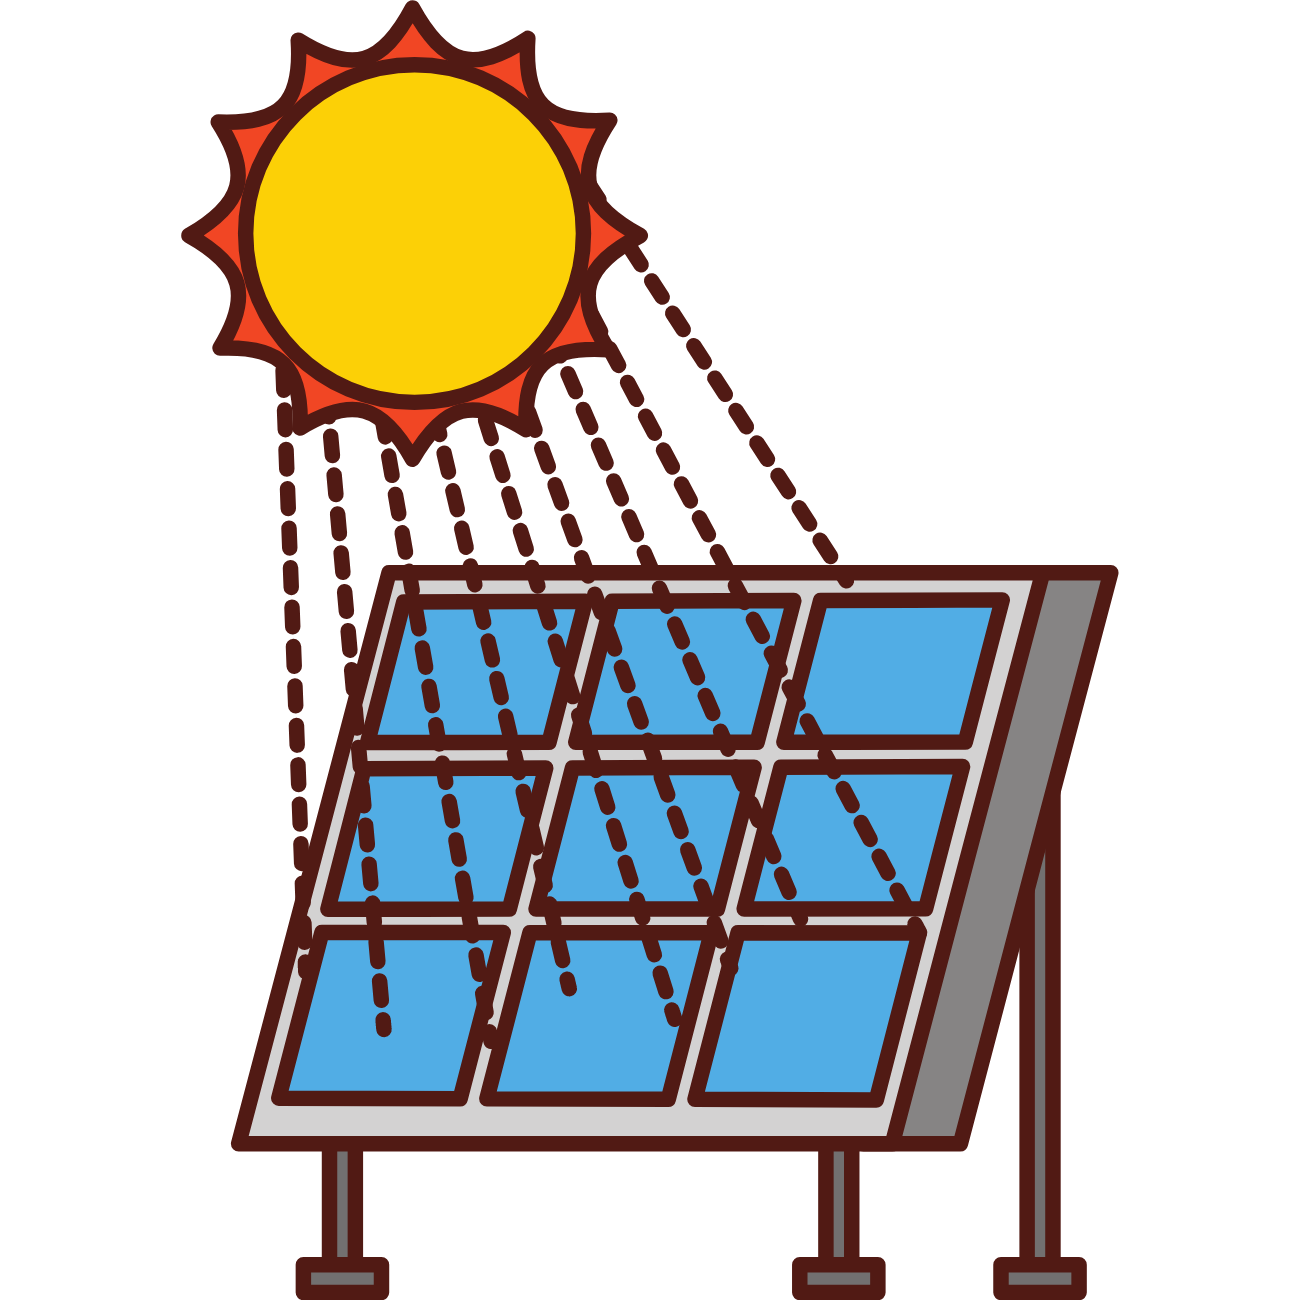 Solar Panel graphic